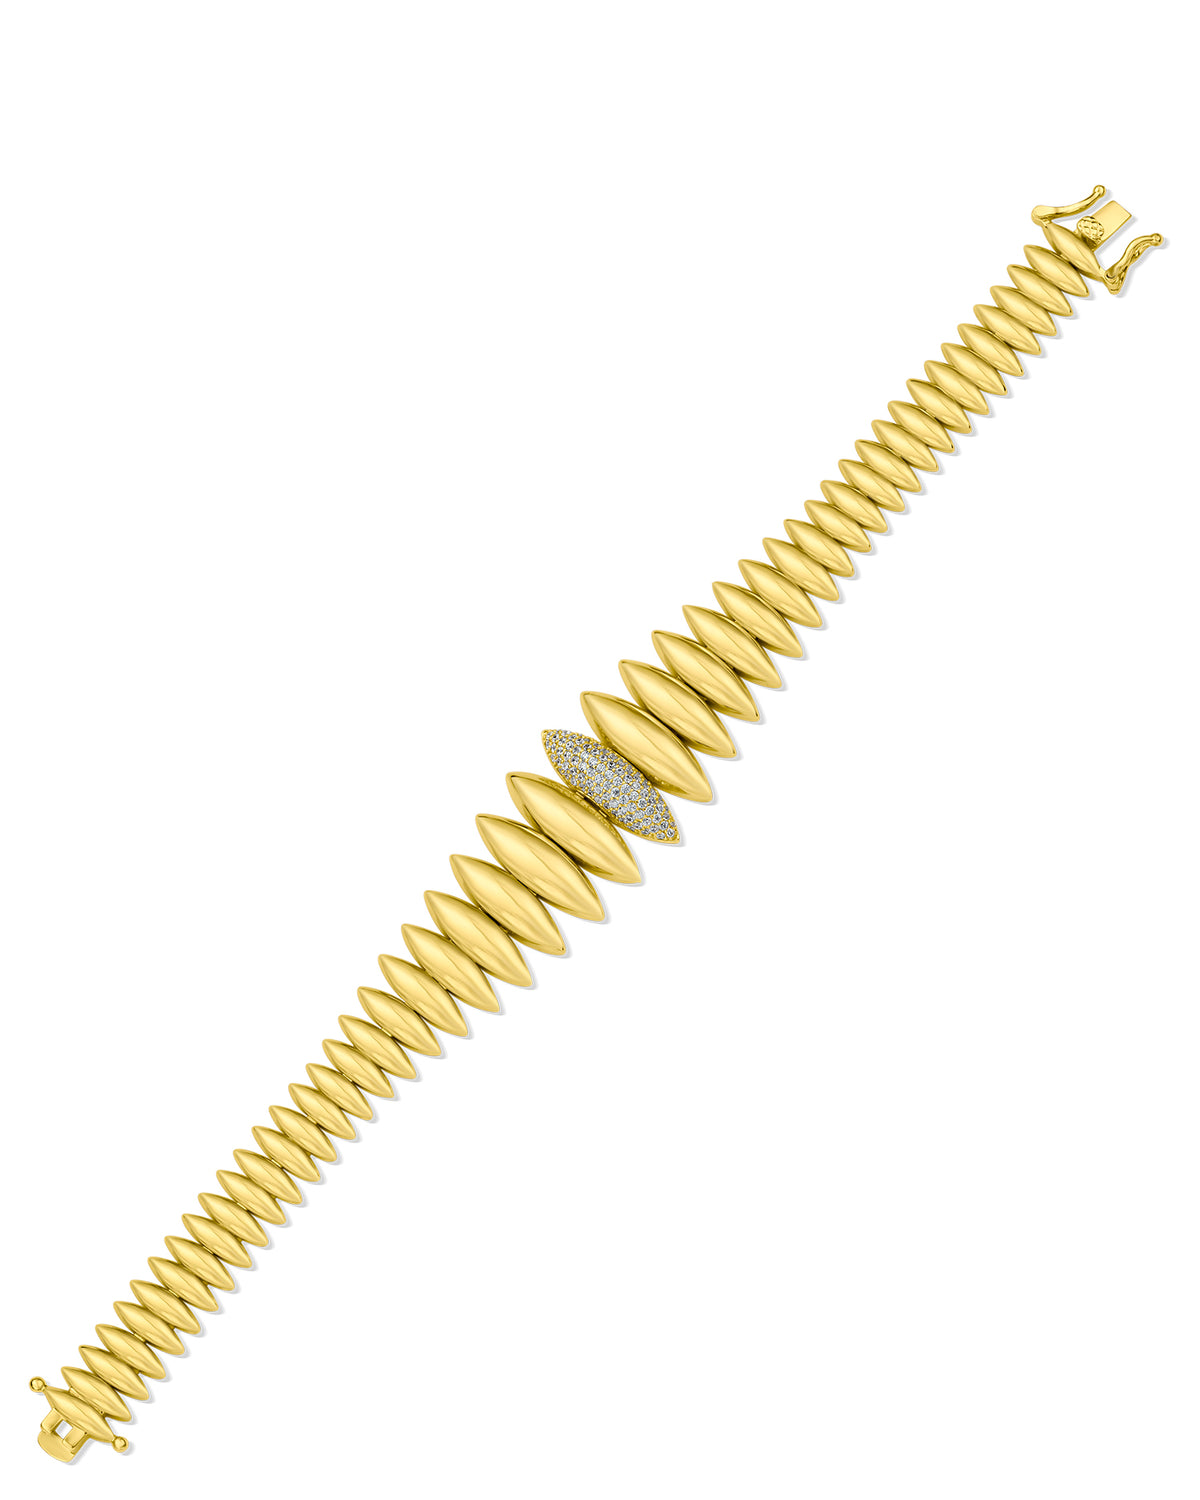 Marquise Shape Link Bracelet